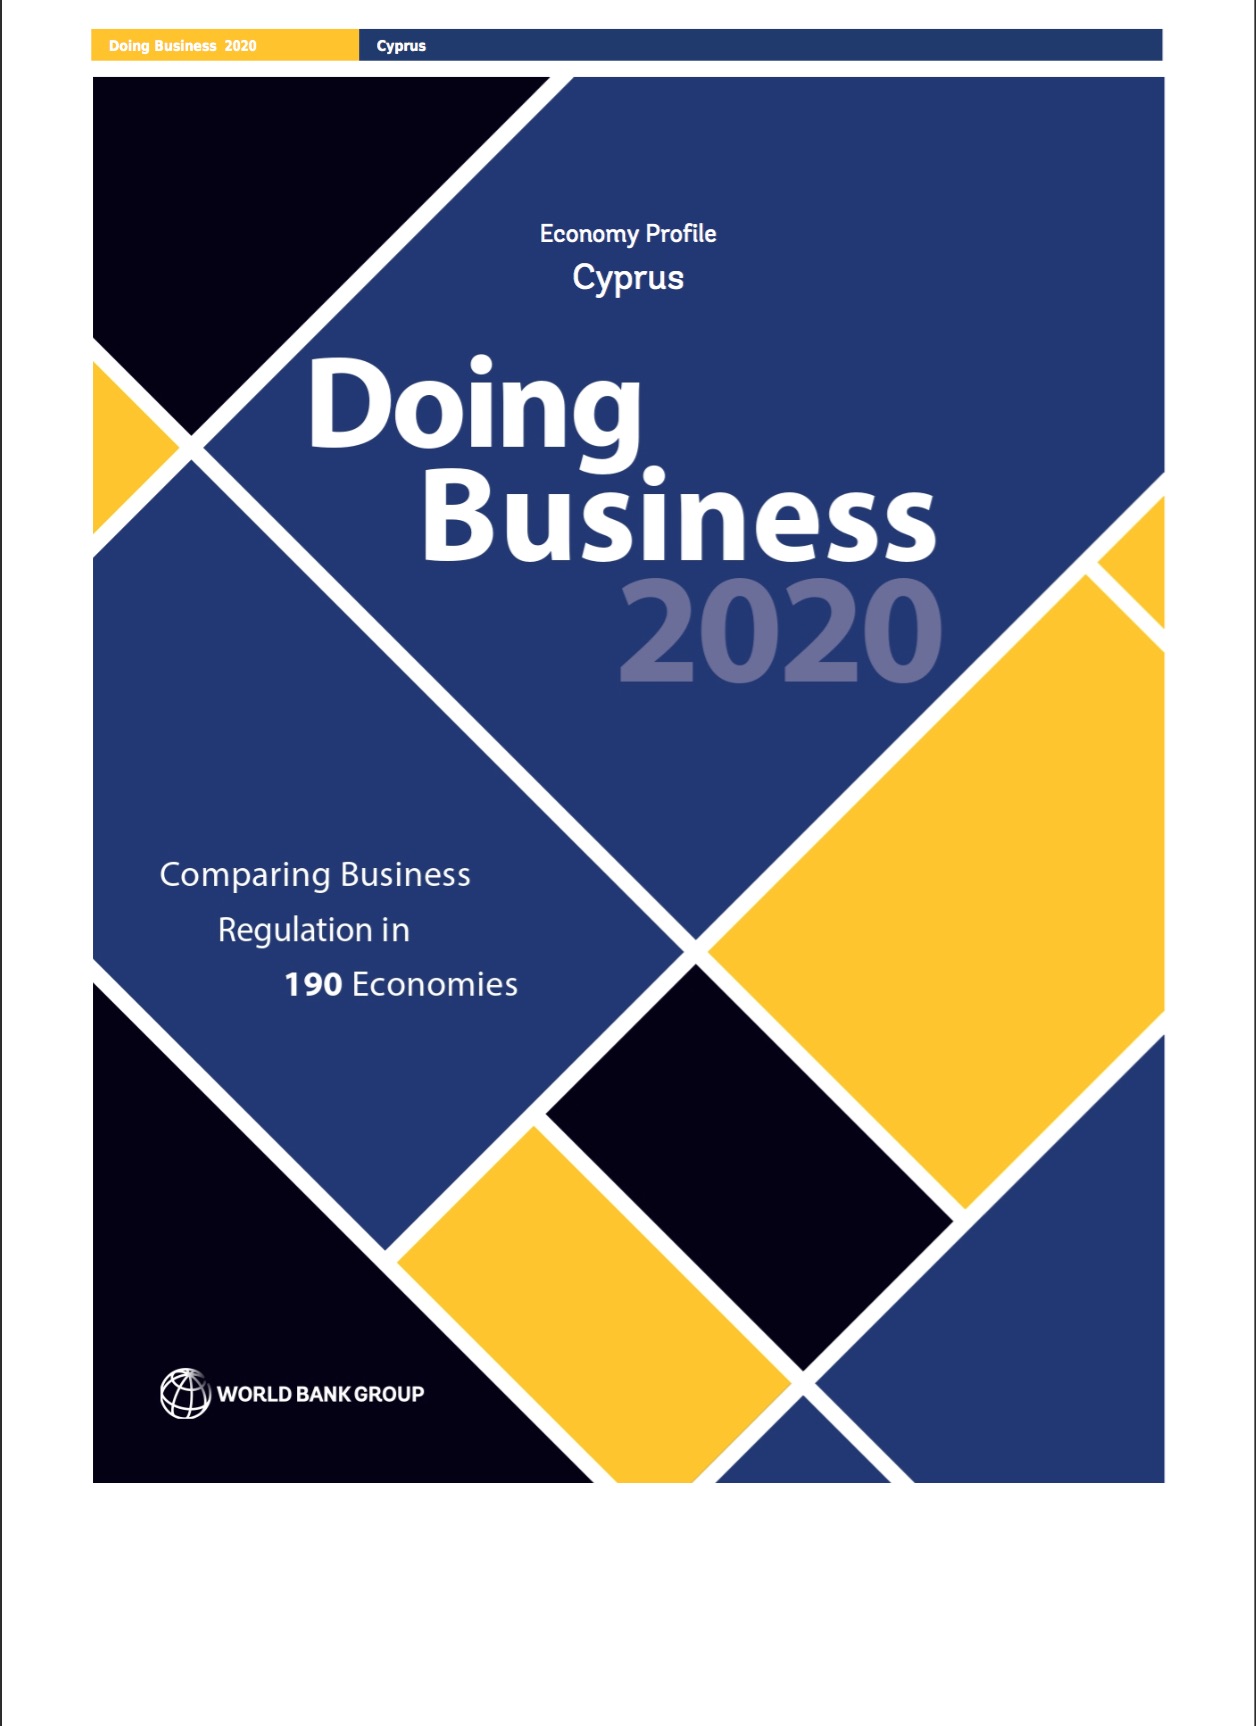 World Bank Doing Business Report 2020 - Cyprus